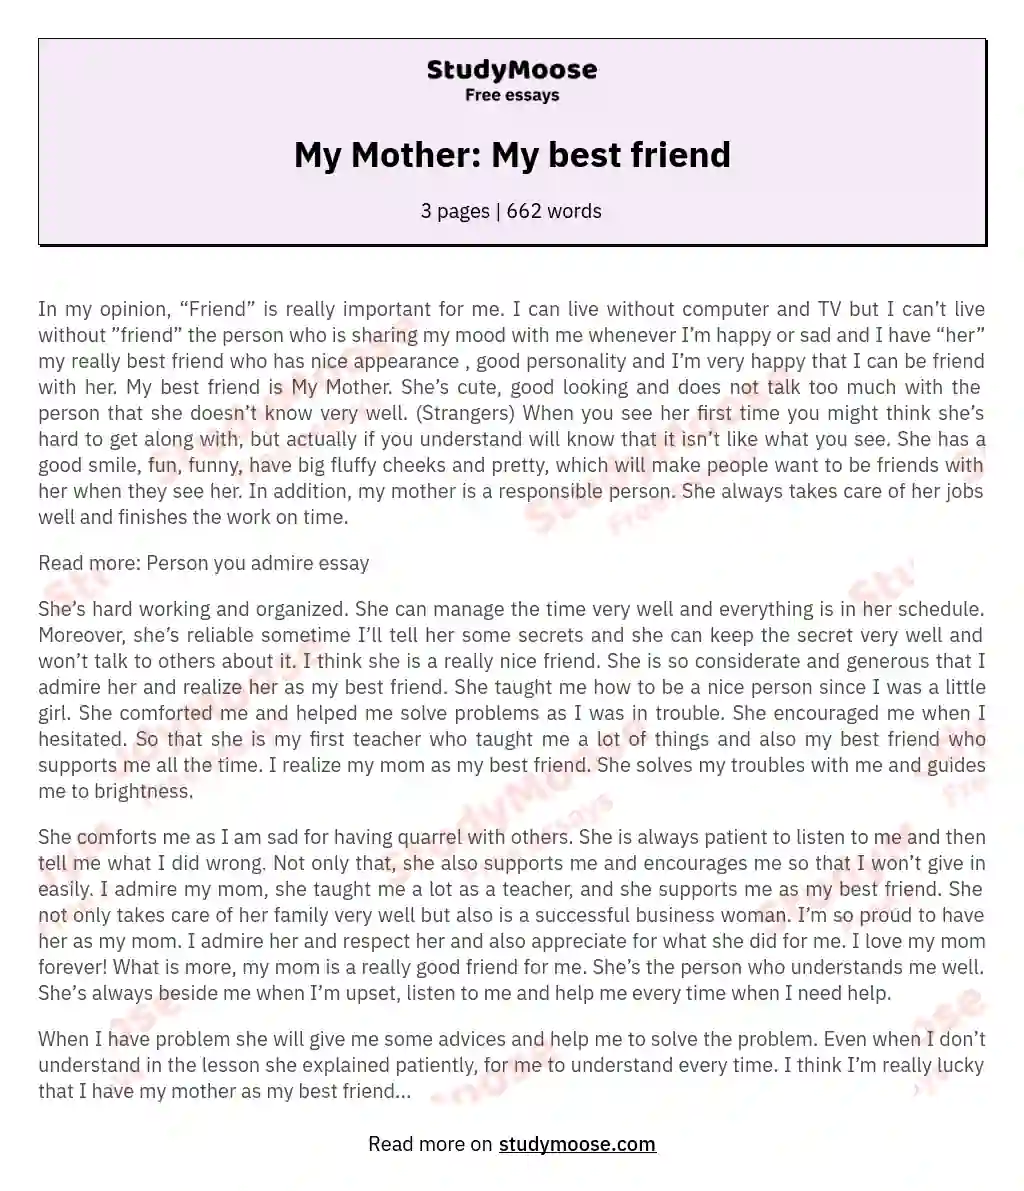 My Mother: My best friend essay